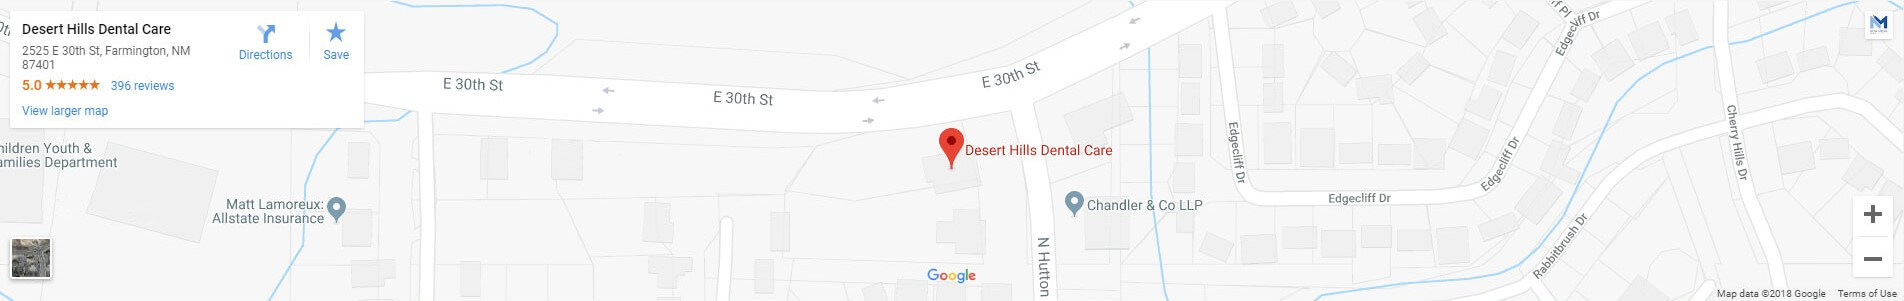 Desert Hills Dental Care location Google map